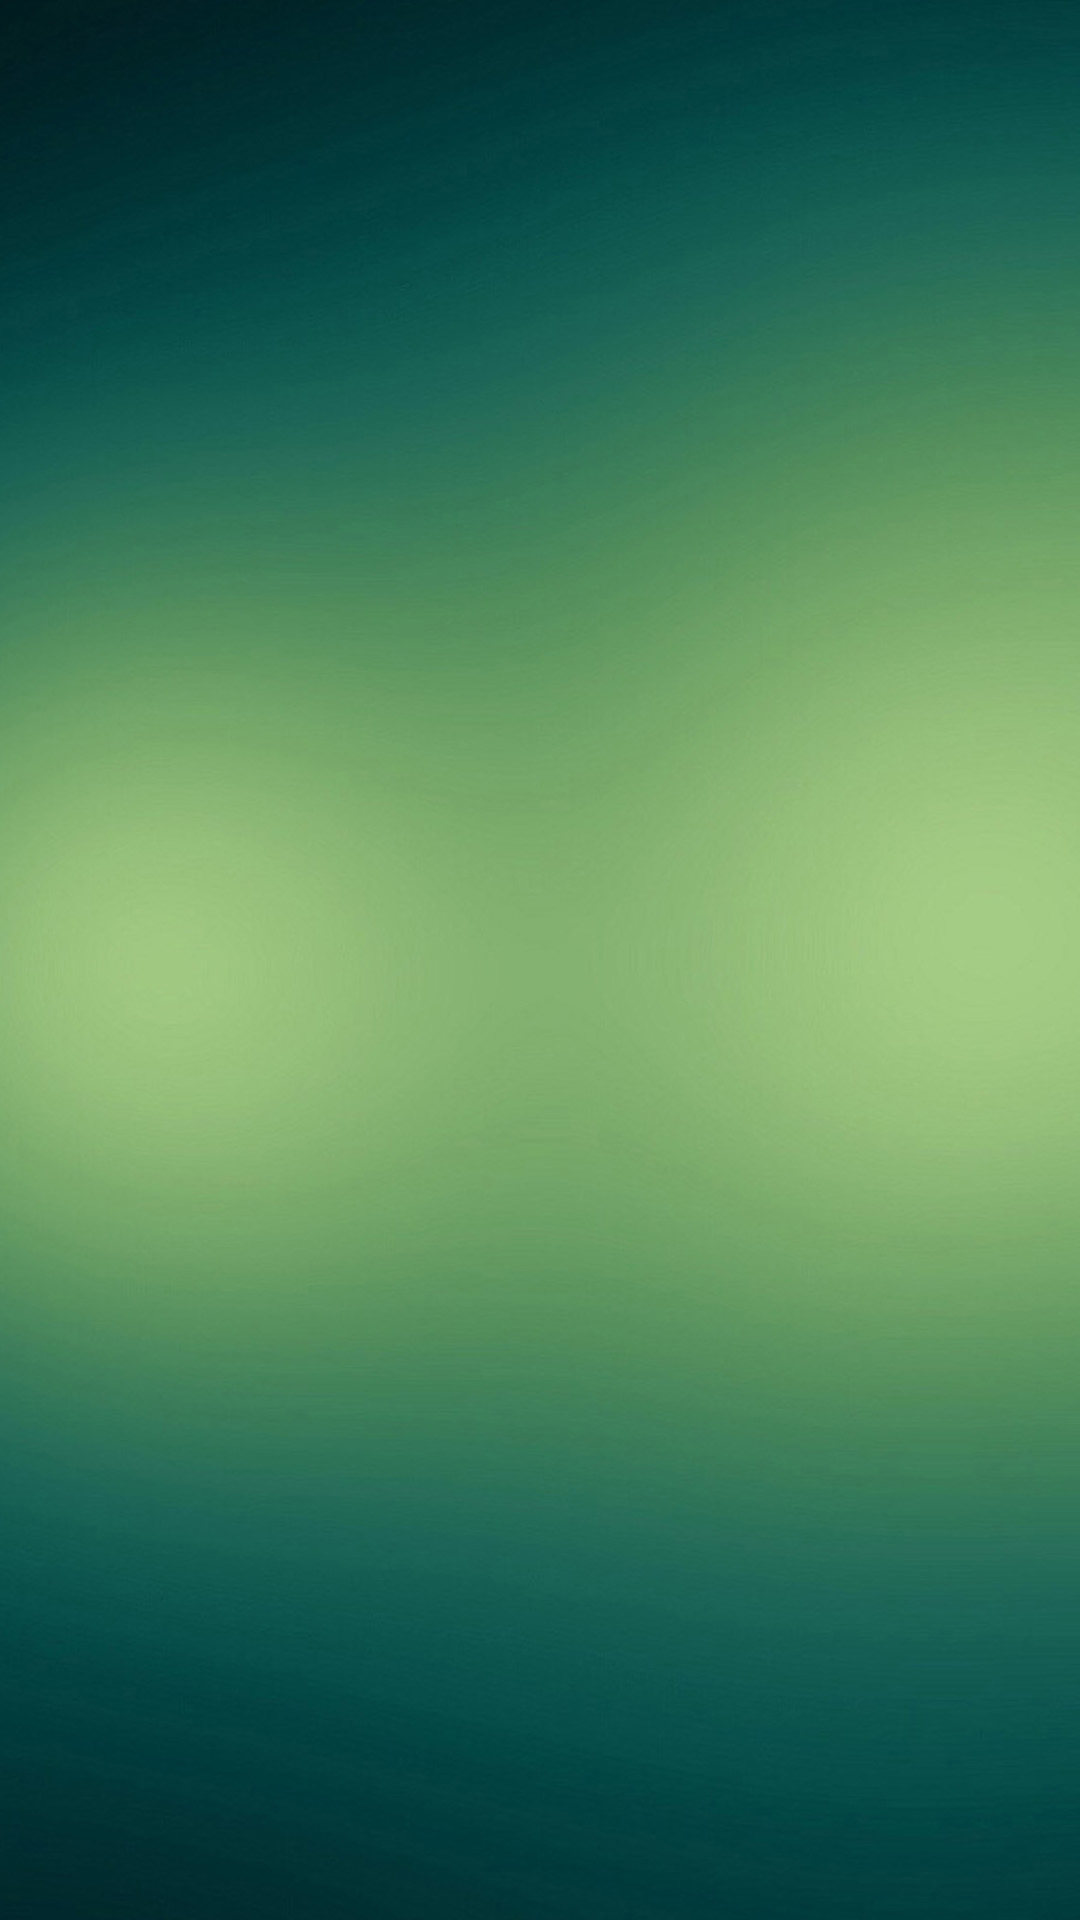 Green Haze Blur Gradient Android Wallpaper